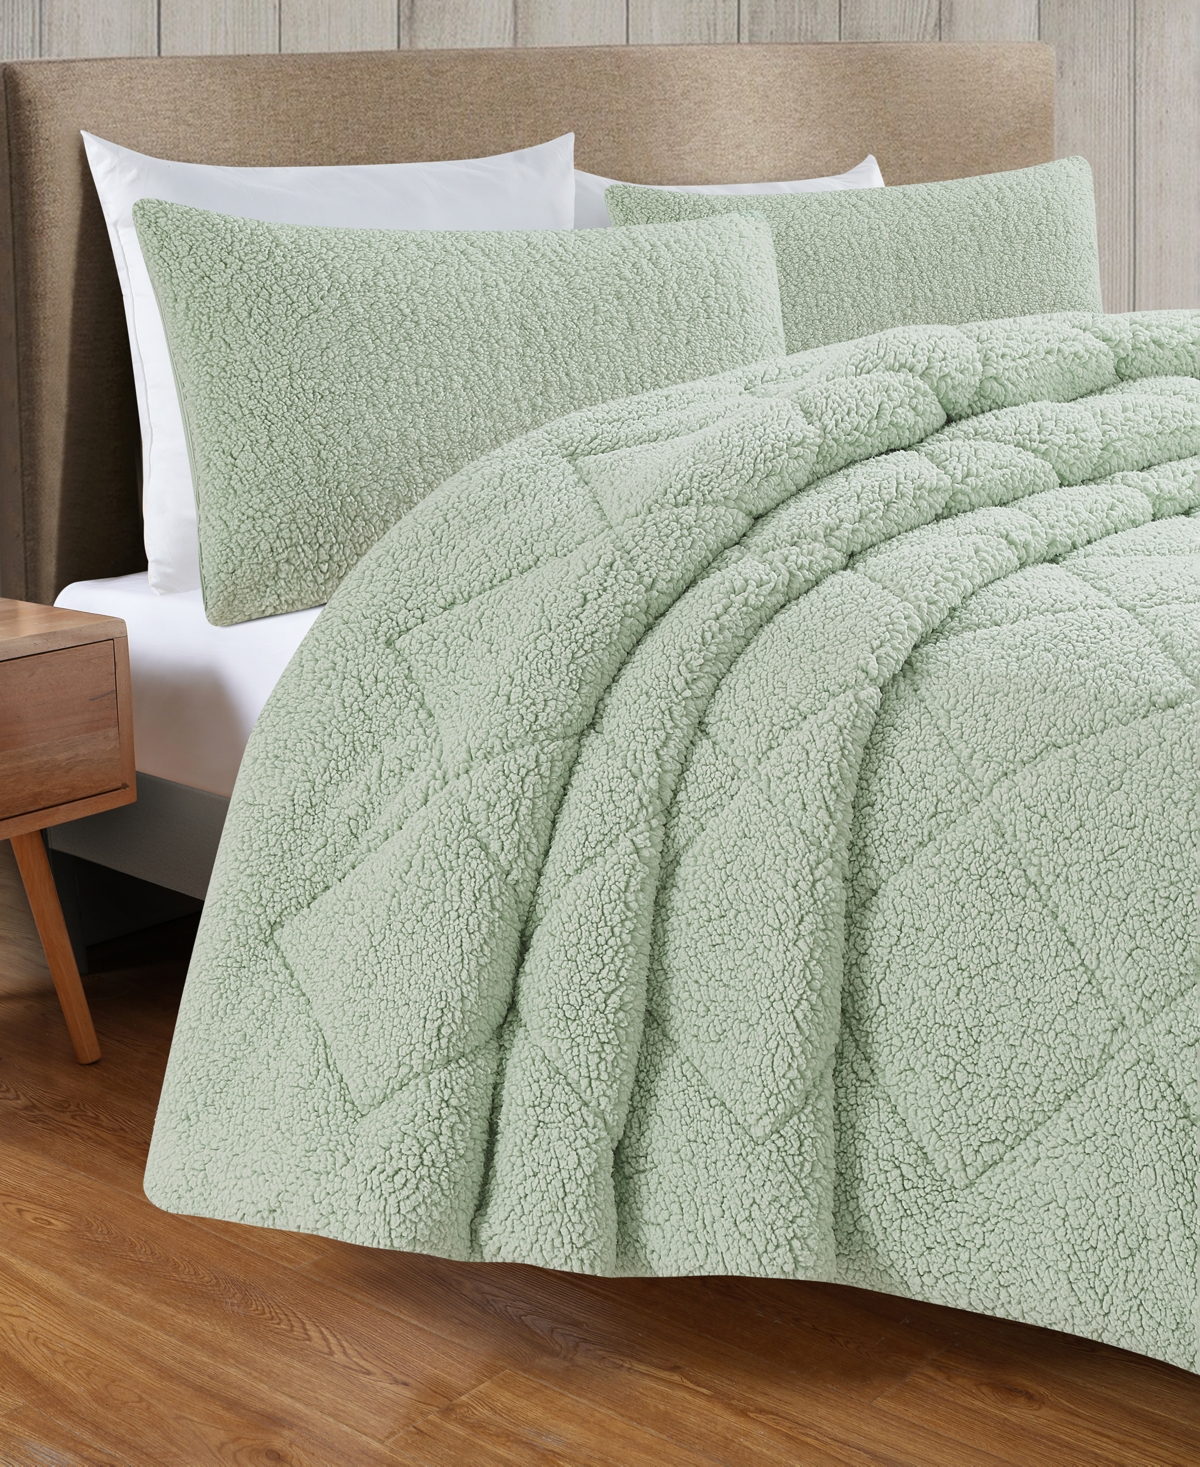 Videri Home Cozy Sherpa 3 Piece Comforter Set, King In Green